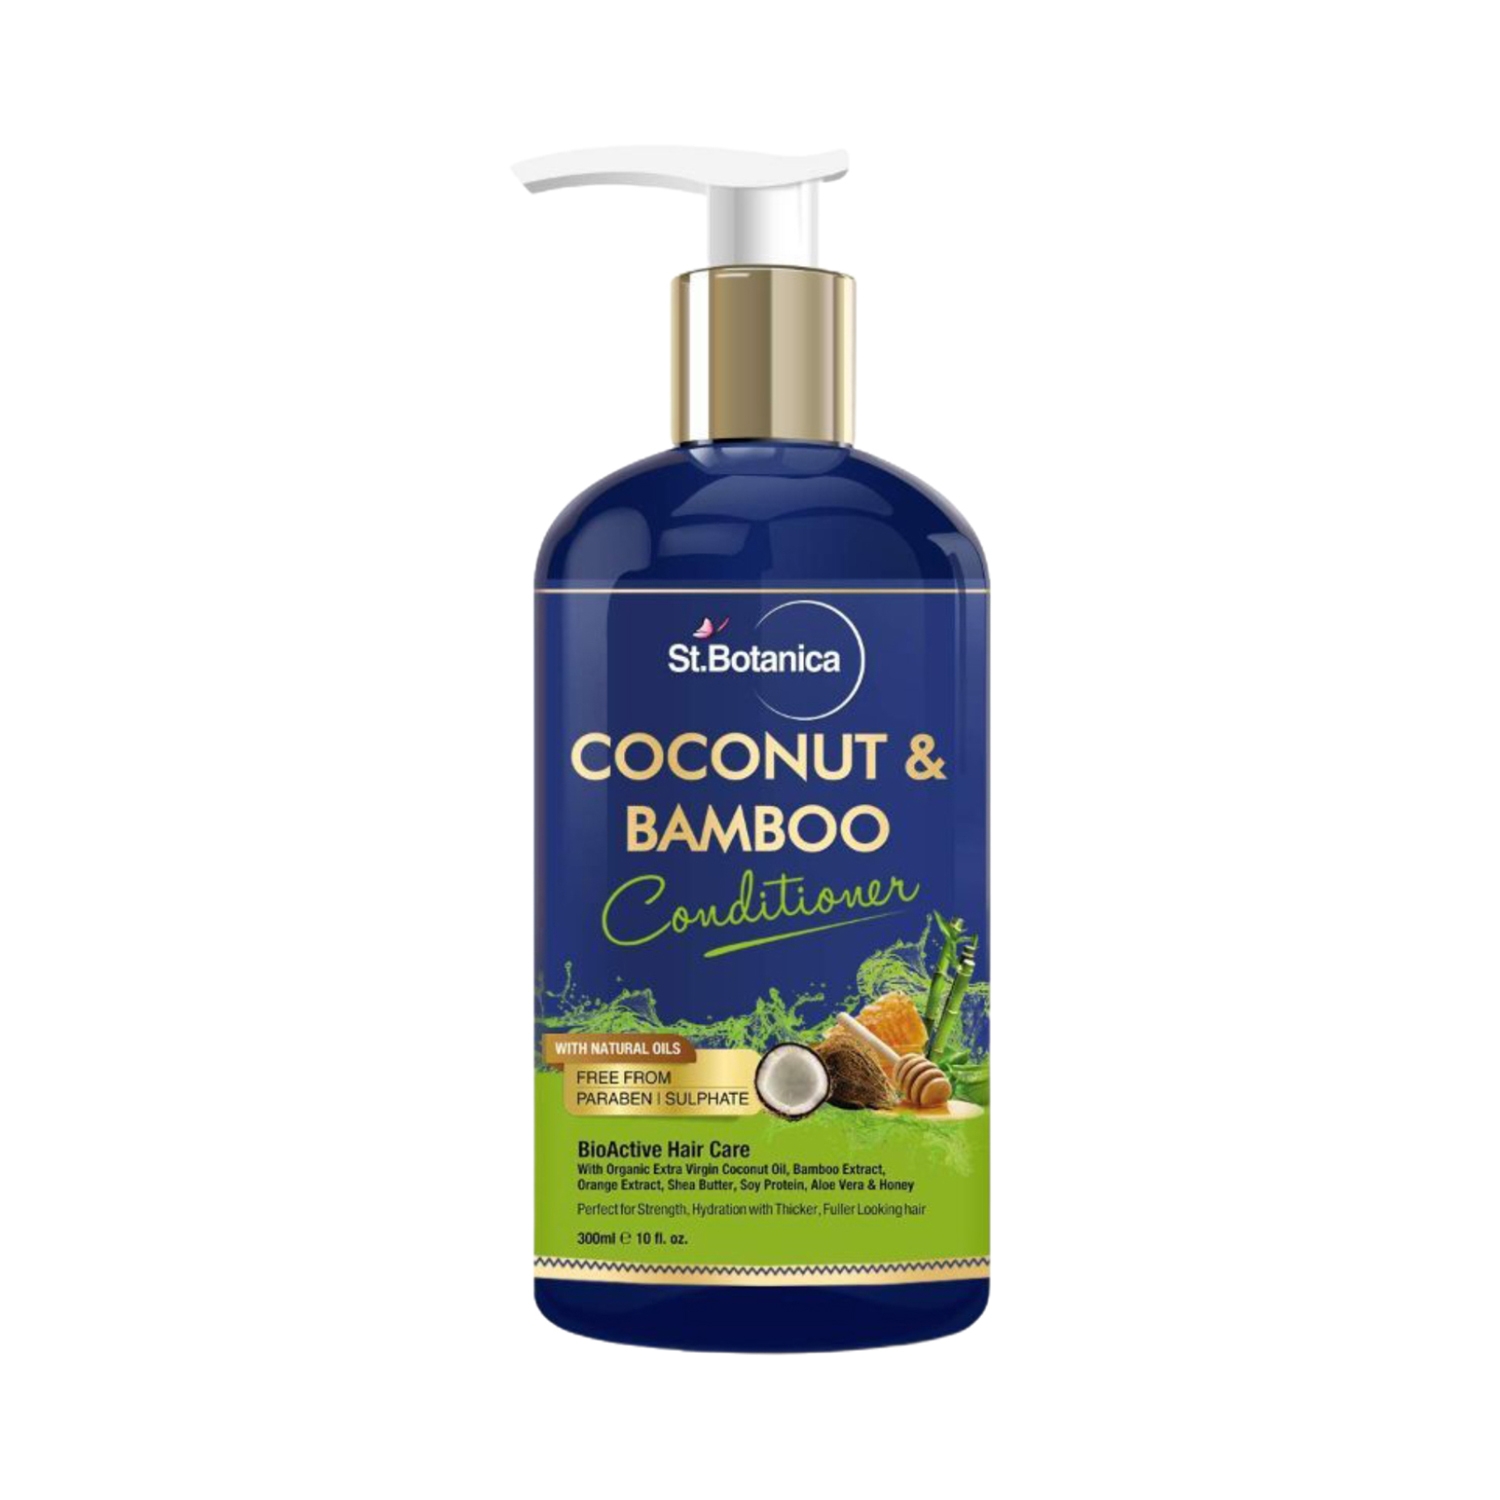 St.Botanica | St.Botanica Coconut & Bamboo Hair Conditioner (300ml)